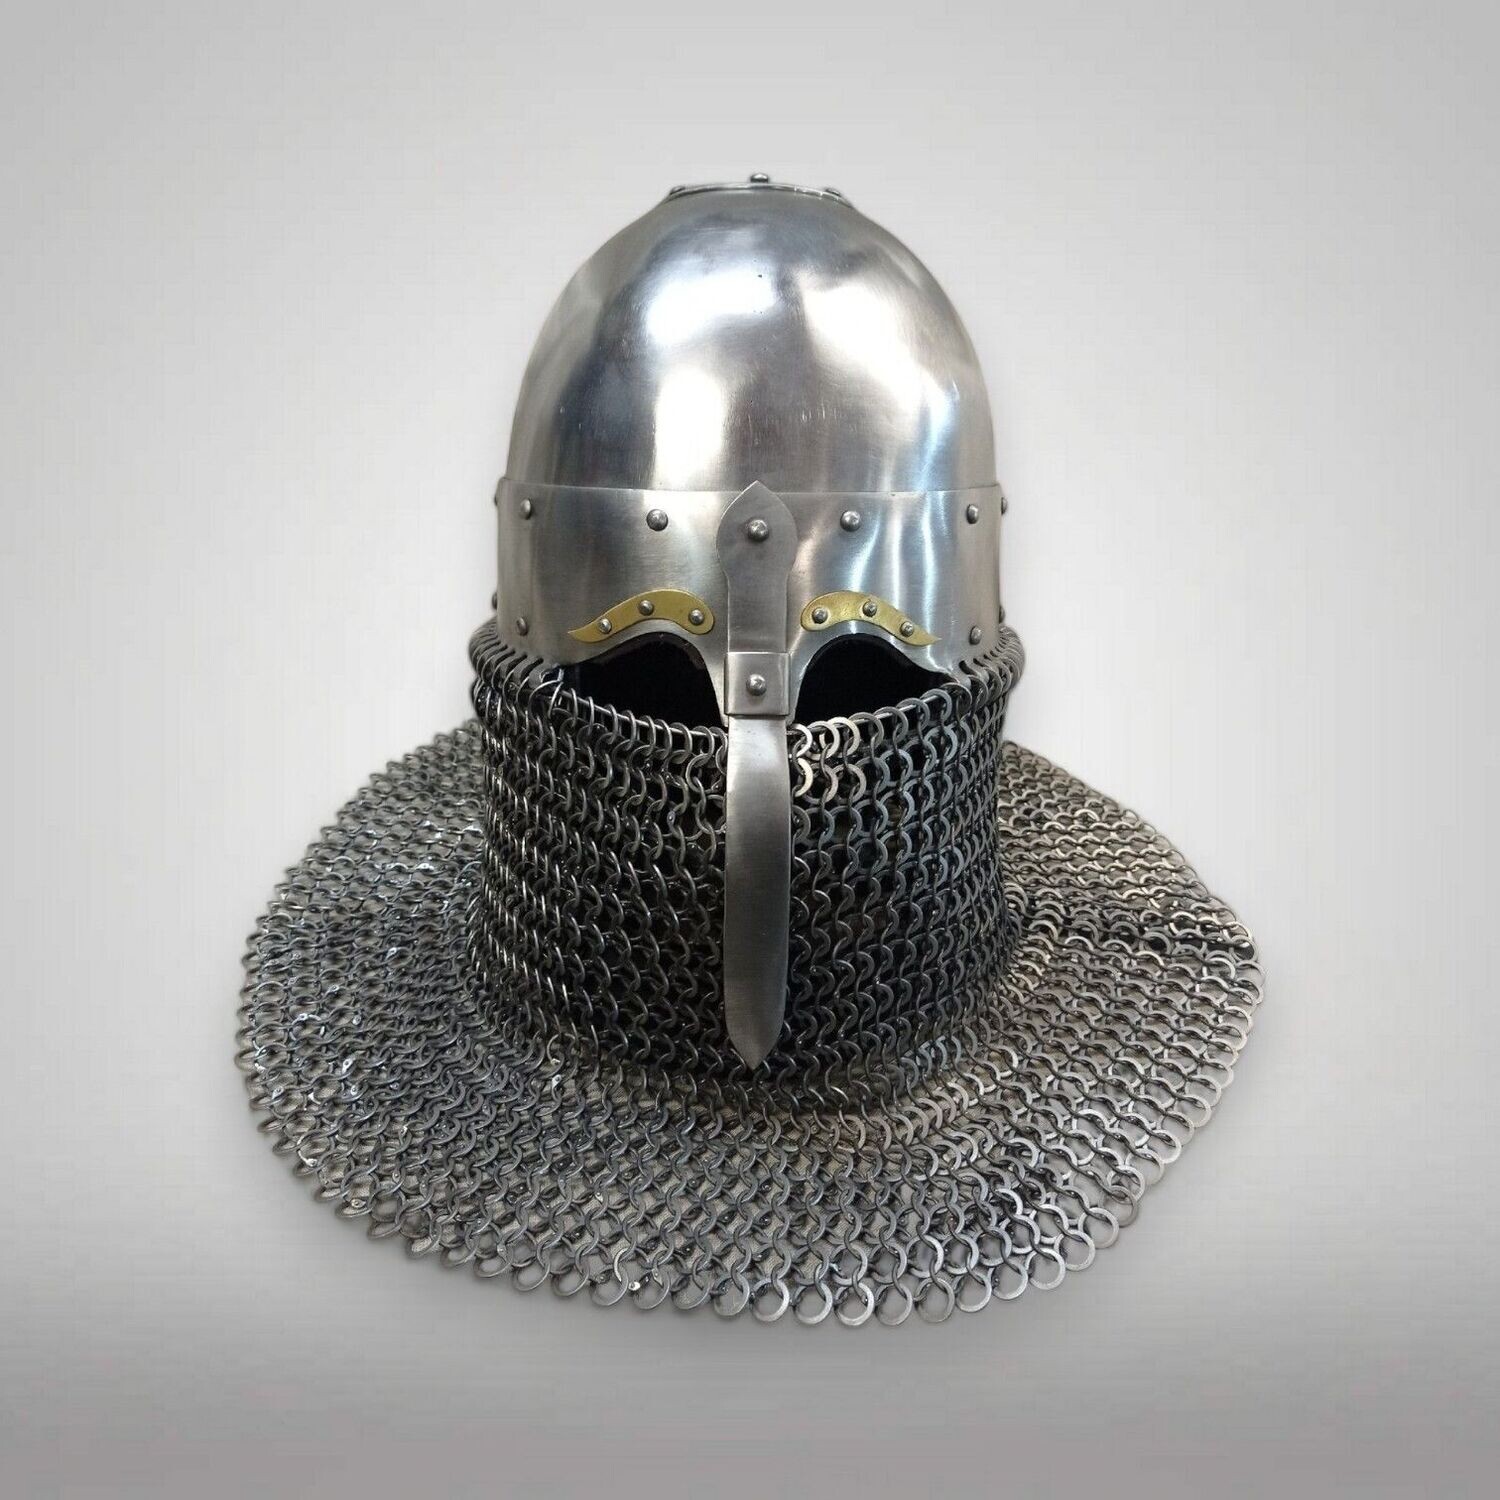 "Turban" helmet - Nomadic / Turkic - 14-15th century